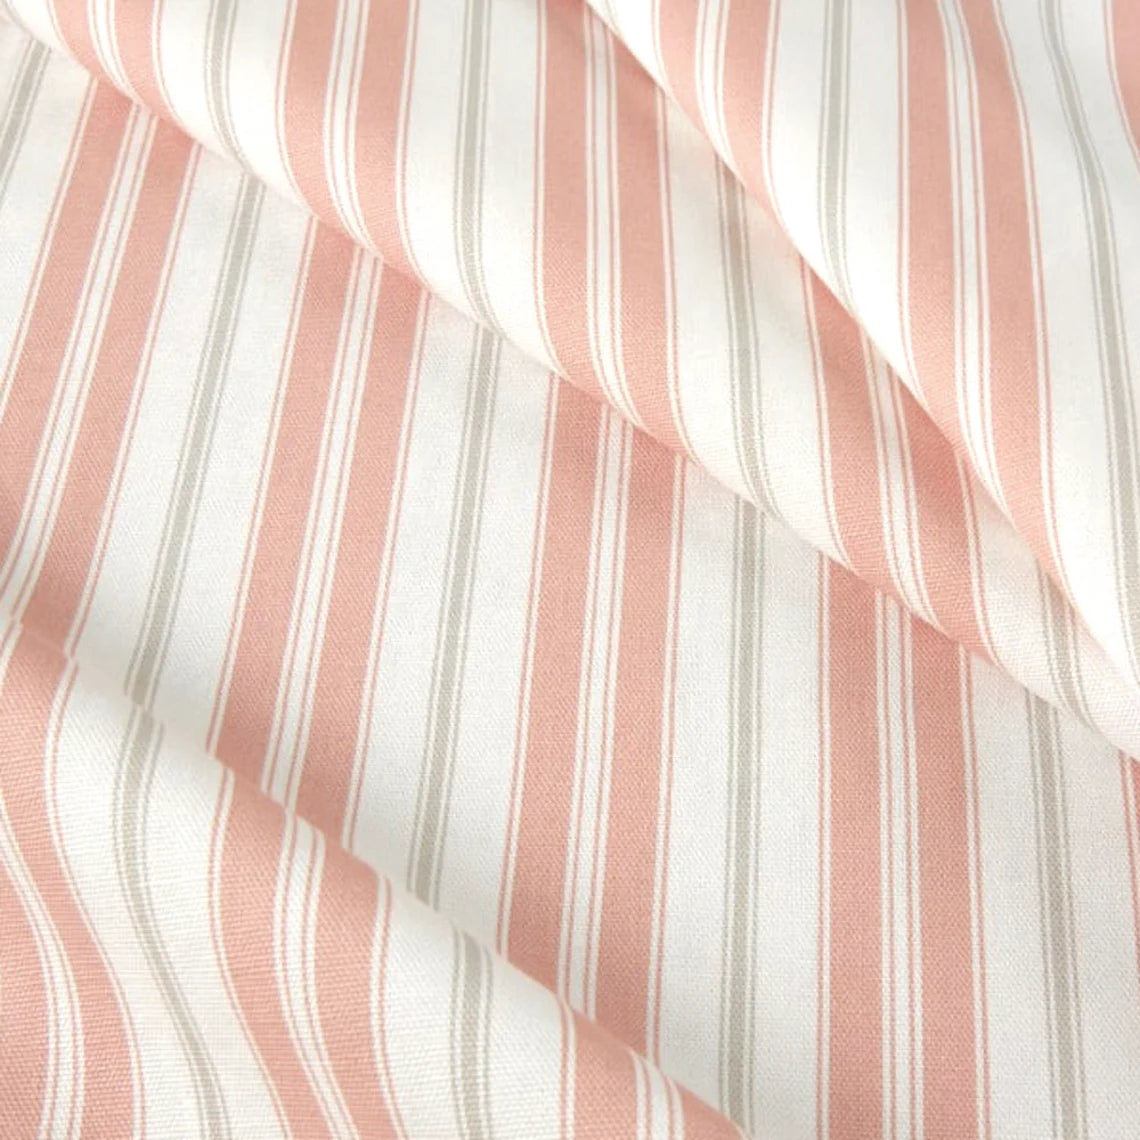 pillow sham in newbury blush stripe- pink, gray, white